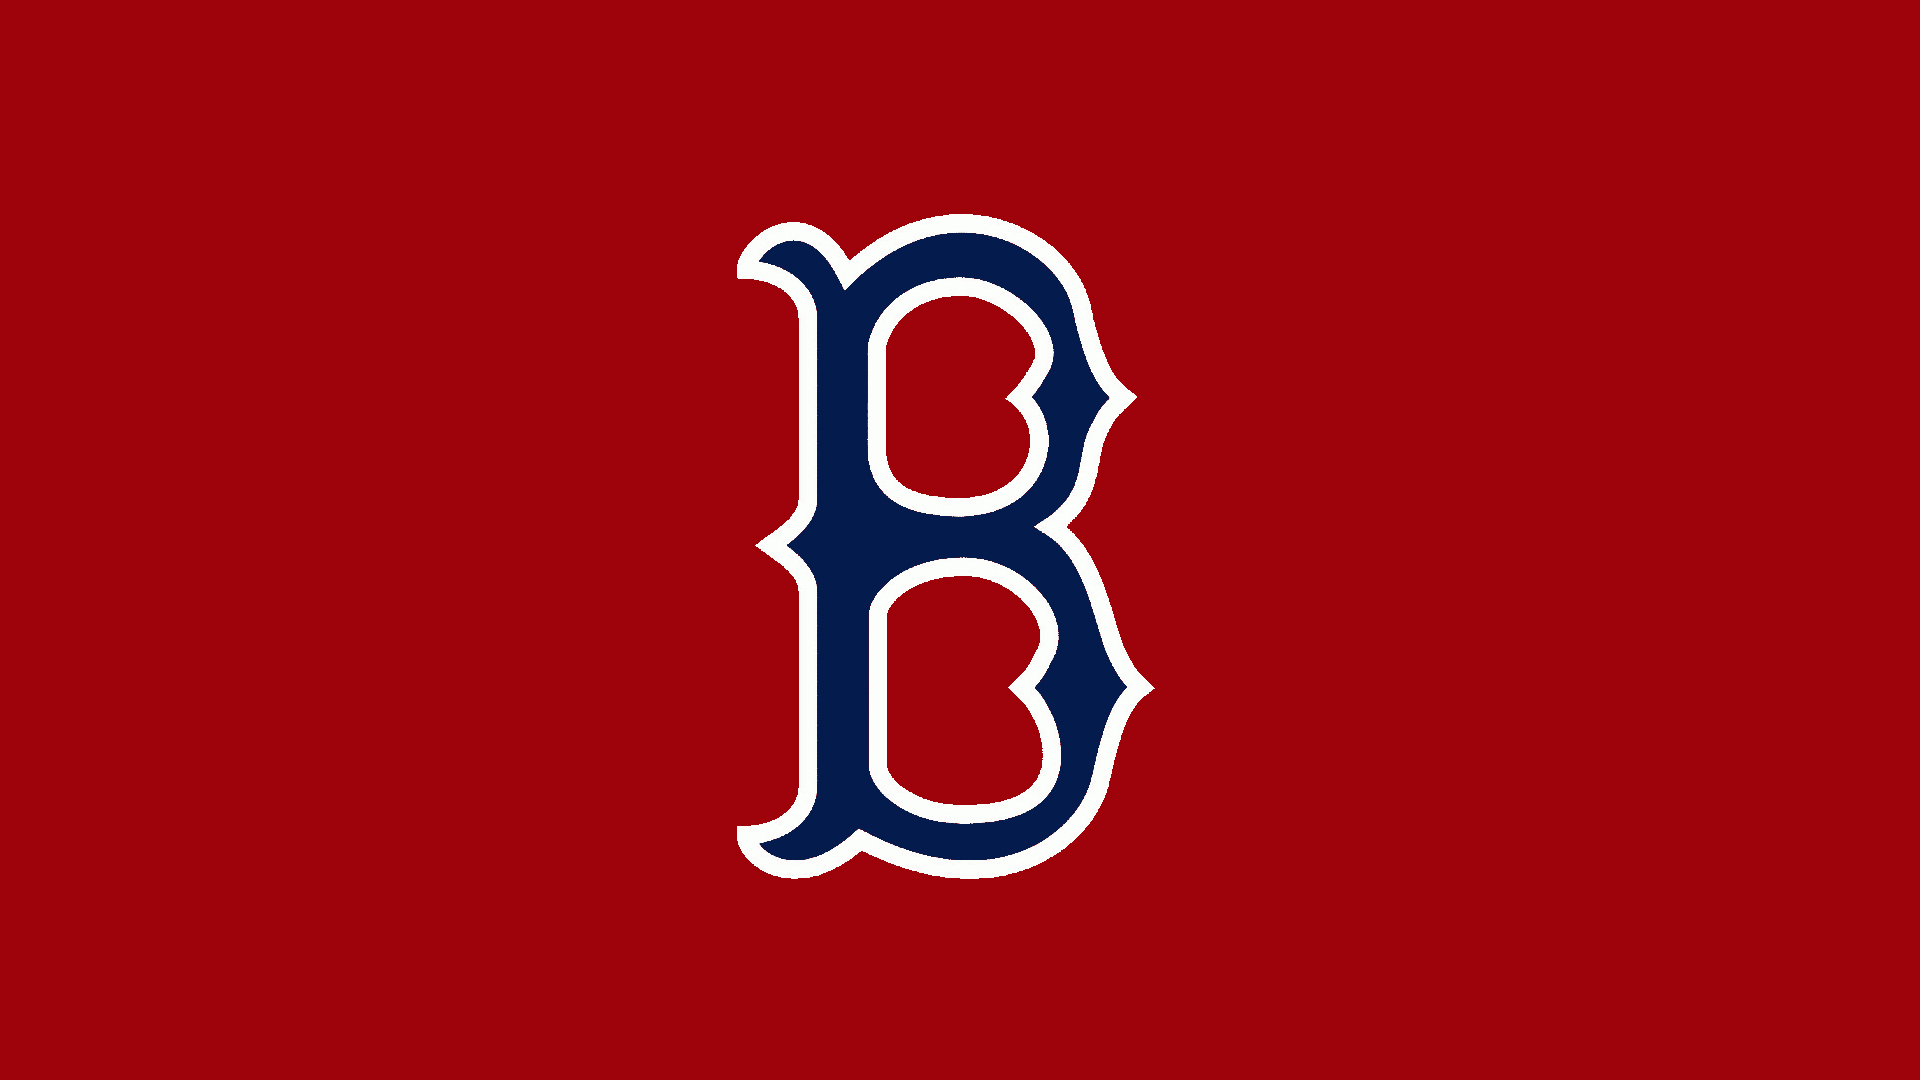 Red Sox Wallpaper Boston Jpg